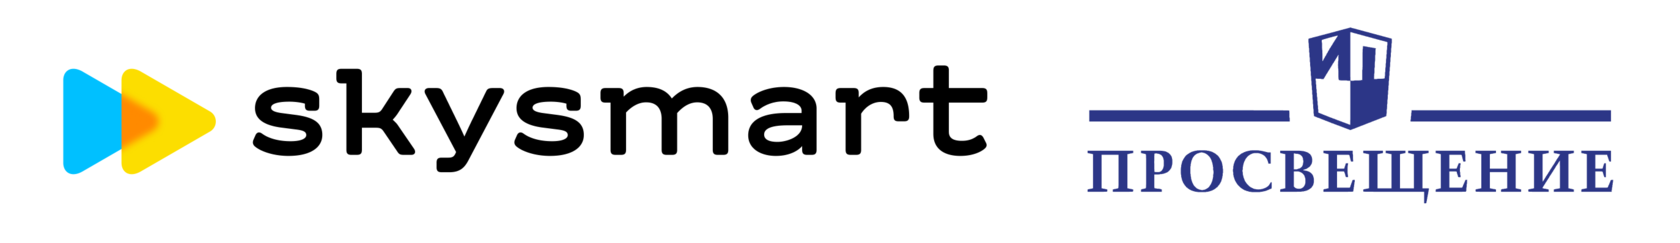 Https beyim edu. SKYSMART. SKYSMART лого. Интерактивная тетрадь Sky Smart. Интерактивная рабочая тетрадь SKYSMART.